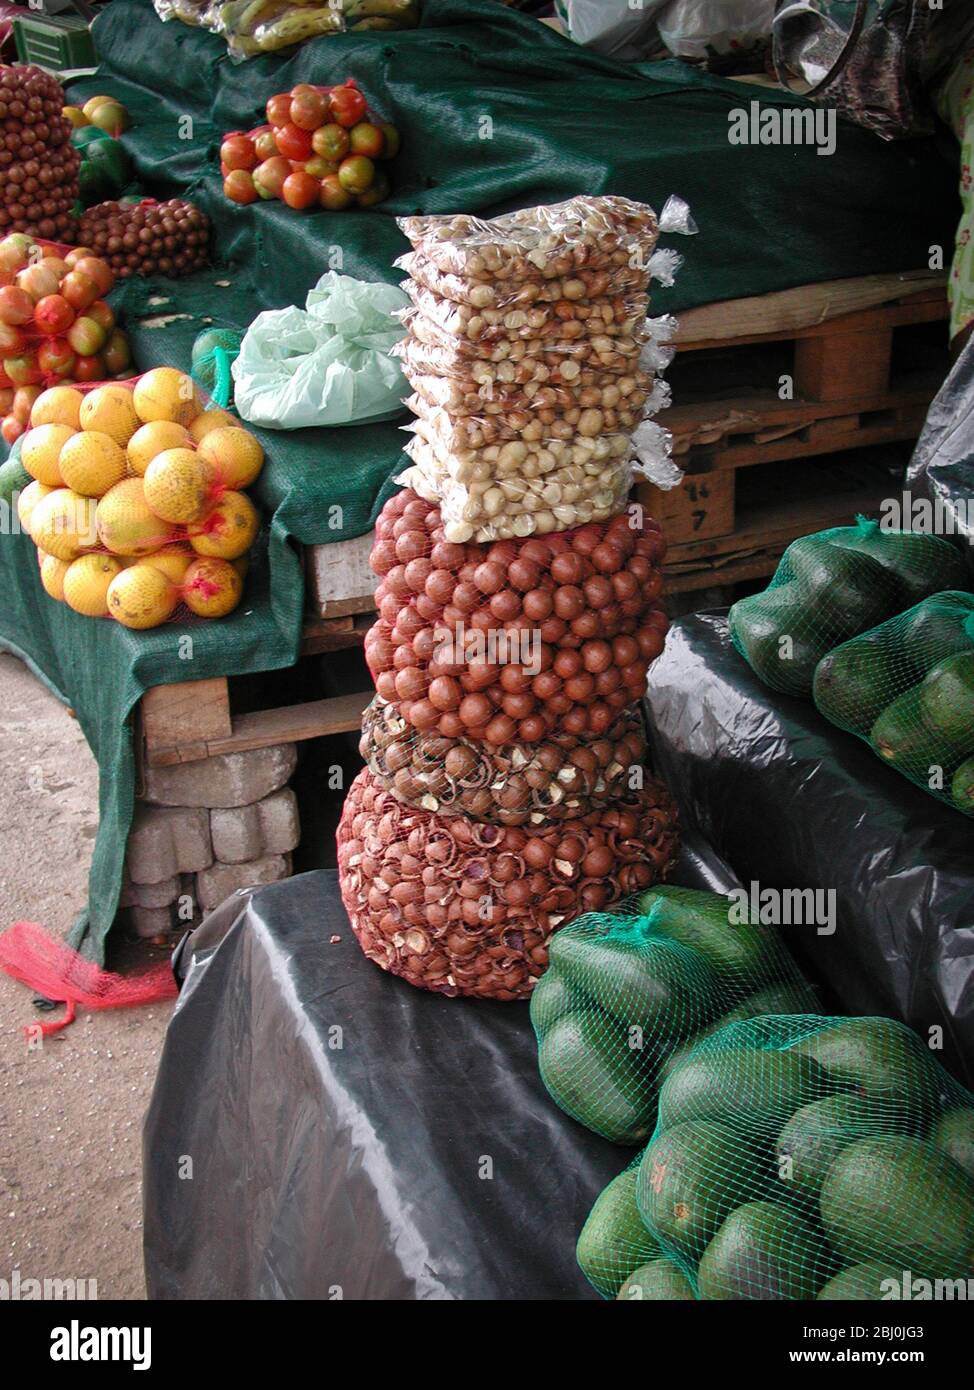 Obst- und Gemüsemarkt in Nelspruit - Mpumalanga, Südafrika - Stockfoto